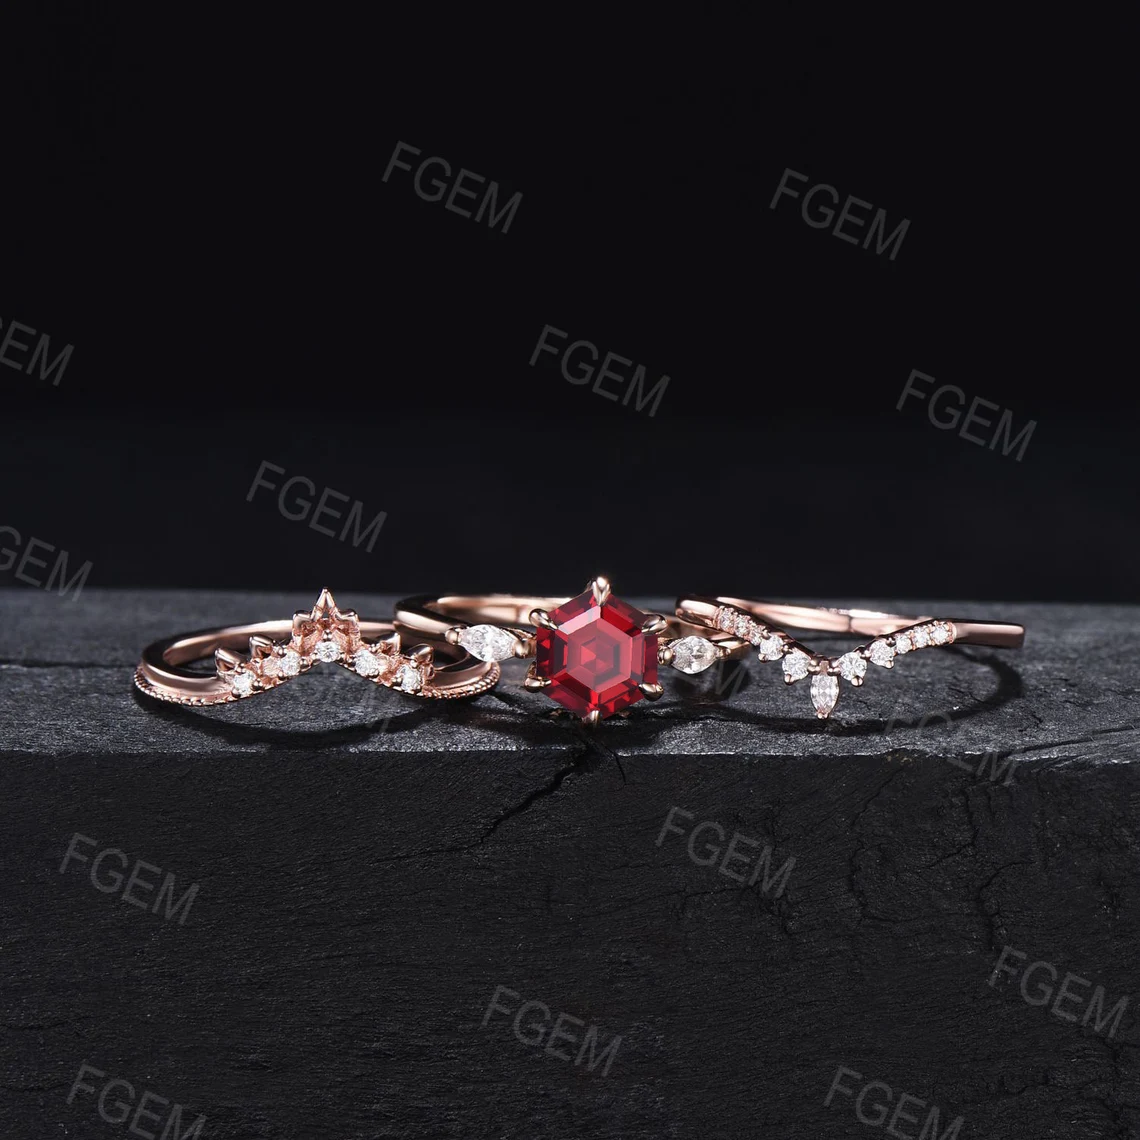 July Birthstone Wedding Ring Set 3pcs Hexagon Cut Red Ruby Gemstone Jewelry 1ct Sterling Silver Ruby Bridal Set Anniversary Gift For Women